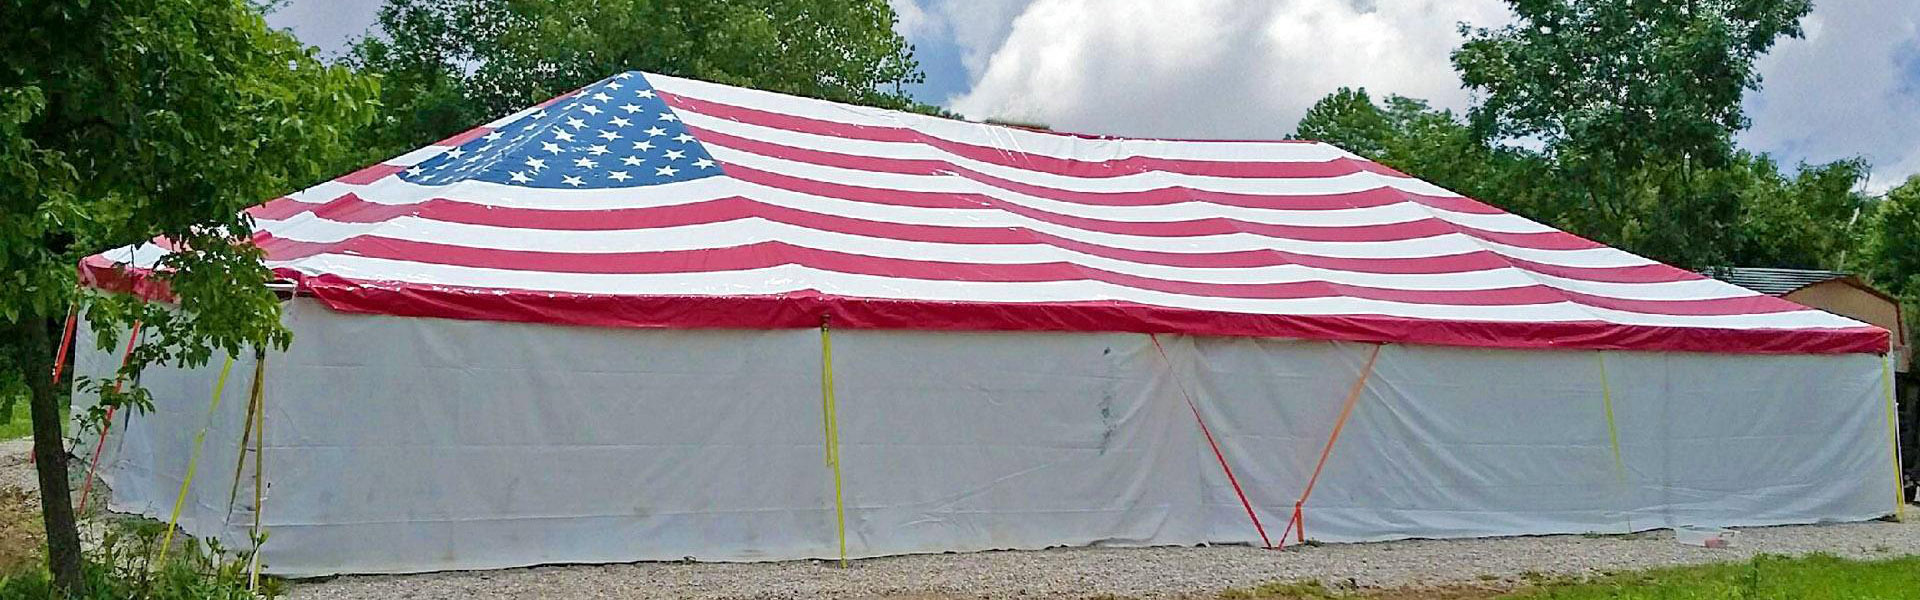 American Flag Tent Rental in Kansas City, MO